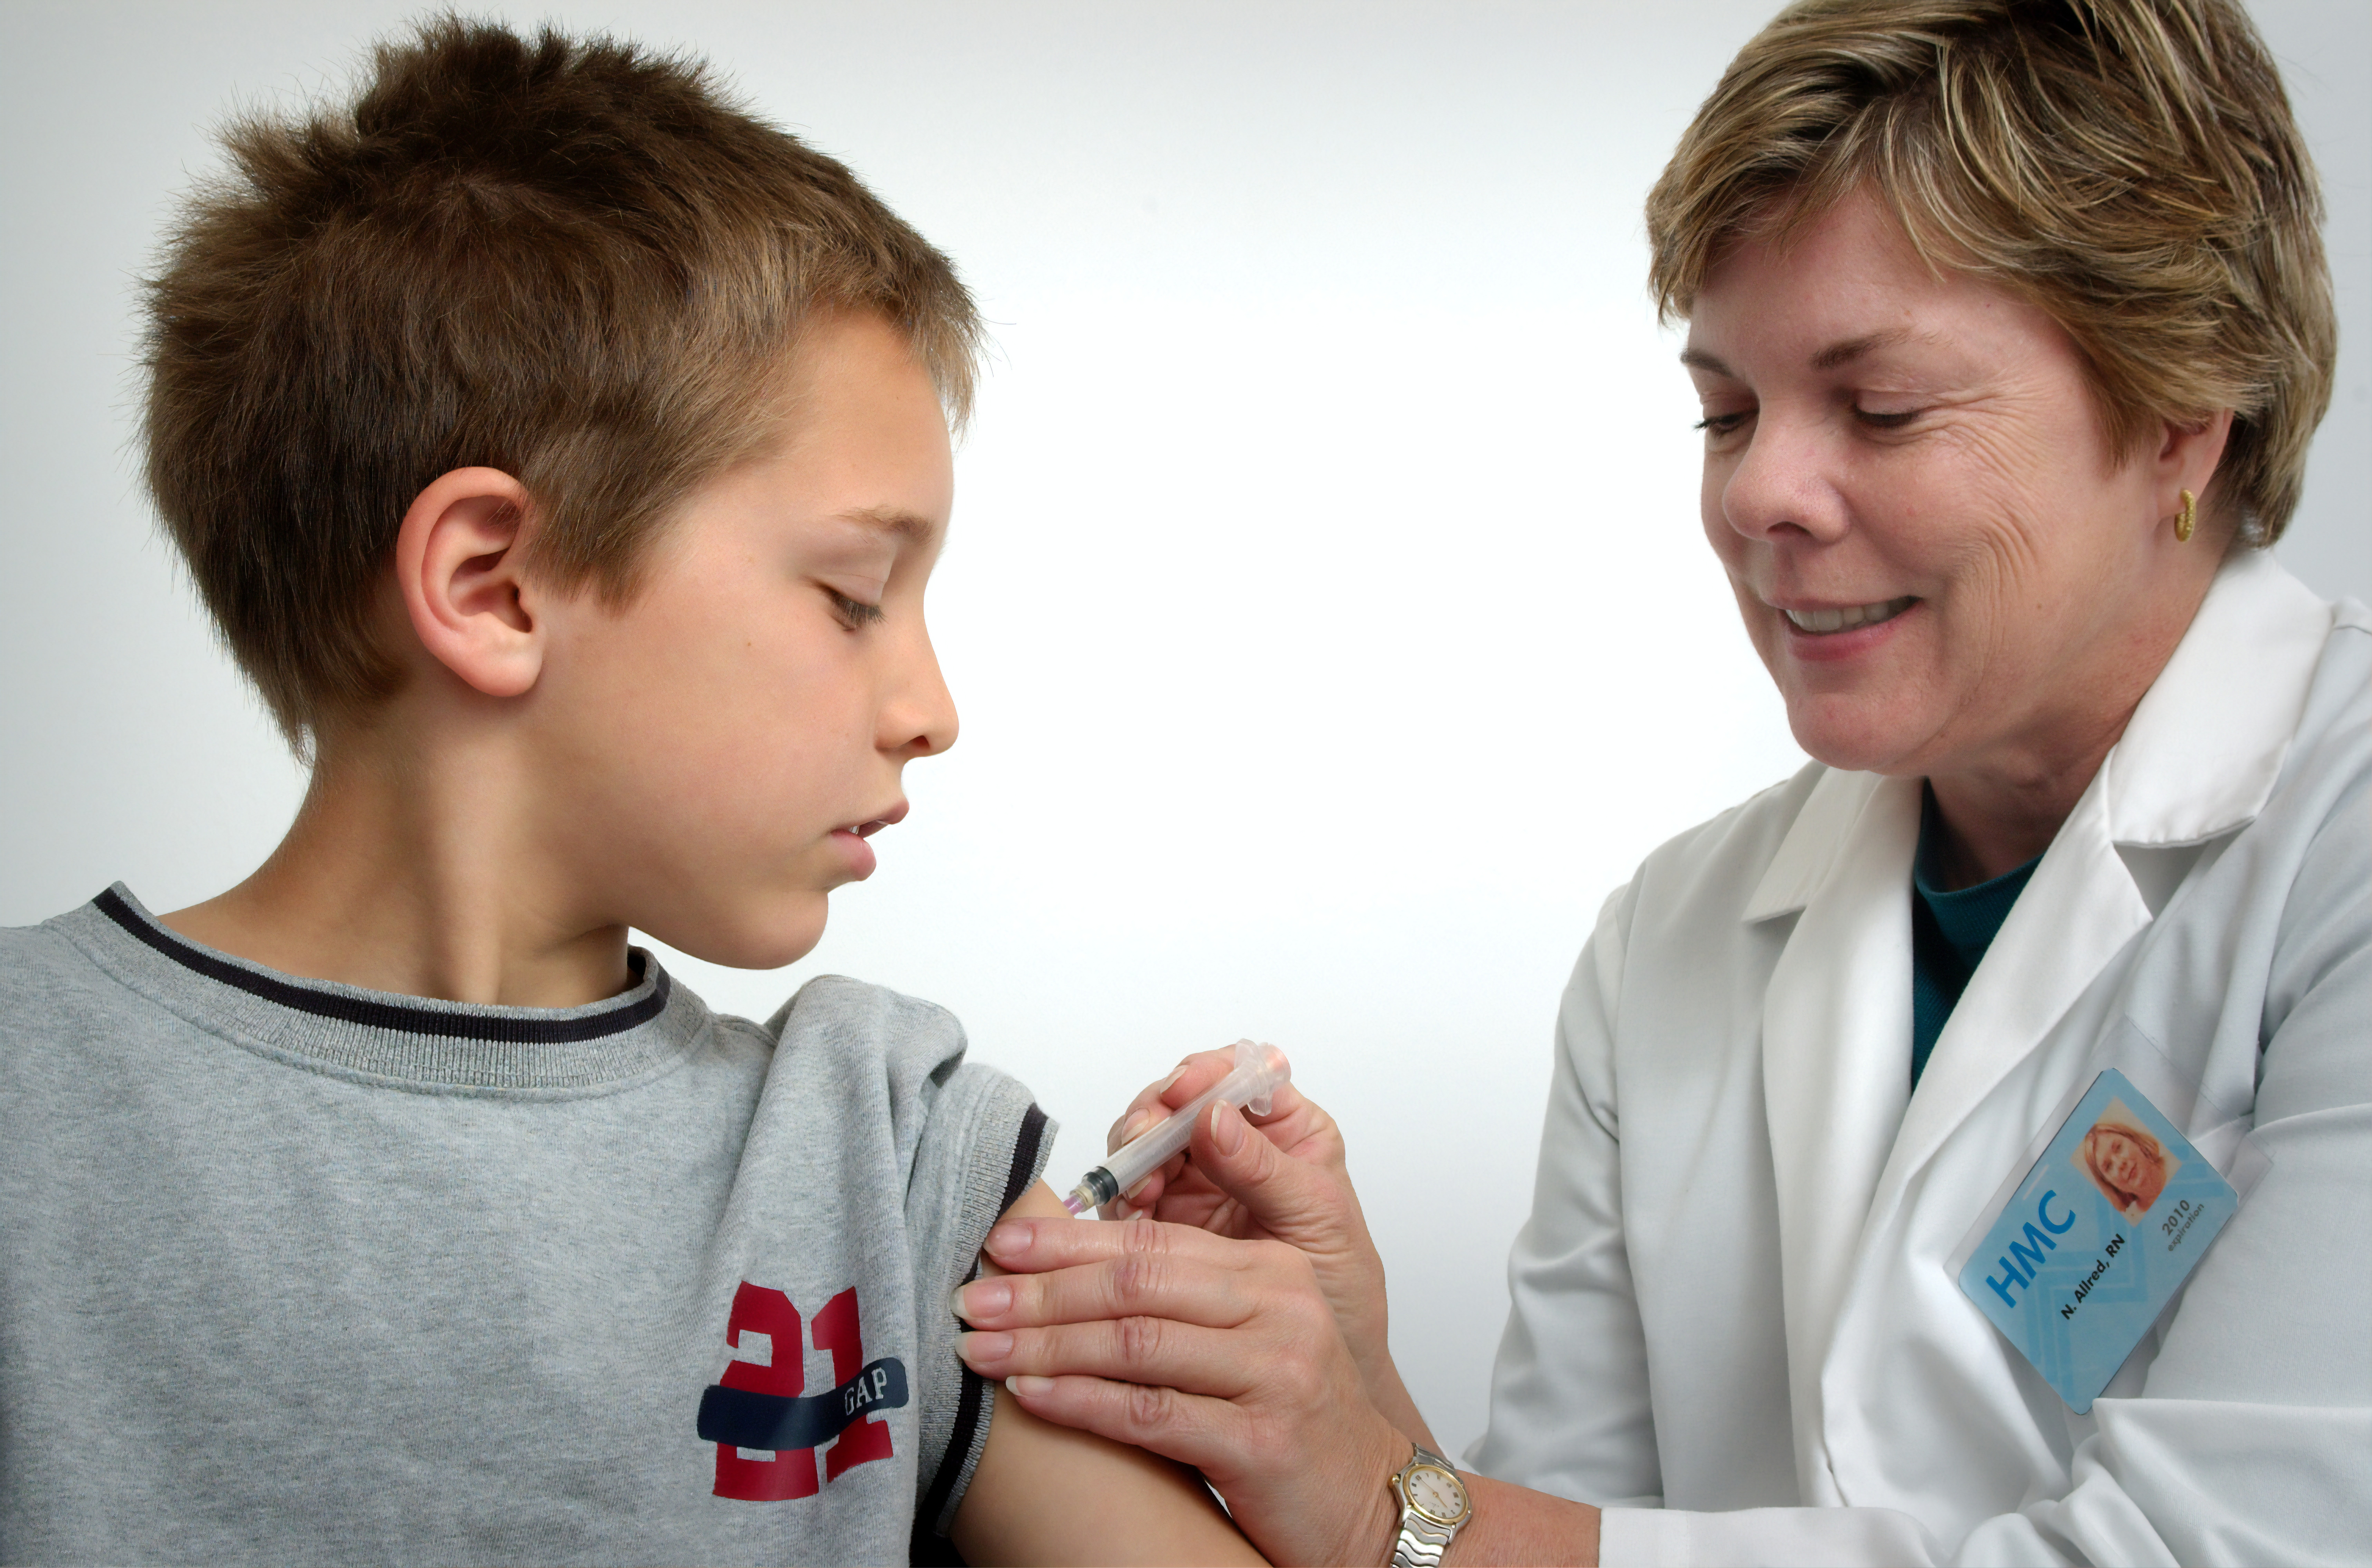 Clinical update: 2020 seasonal influenza vaccines 